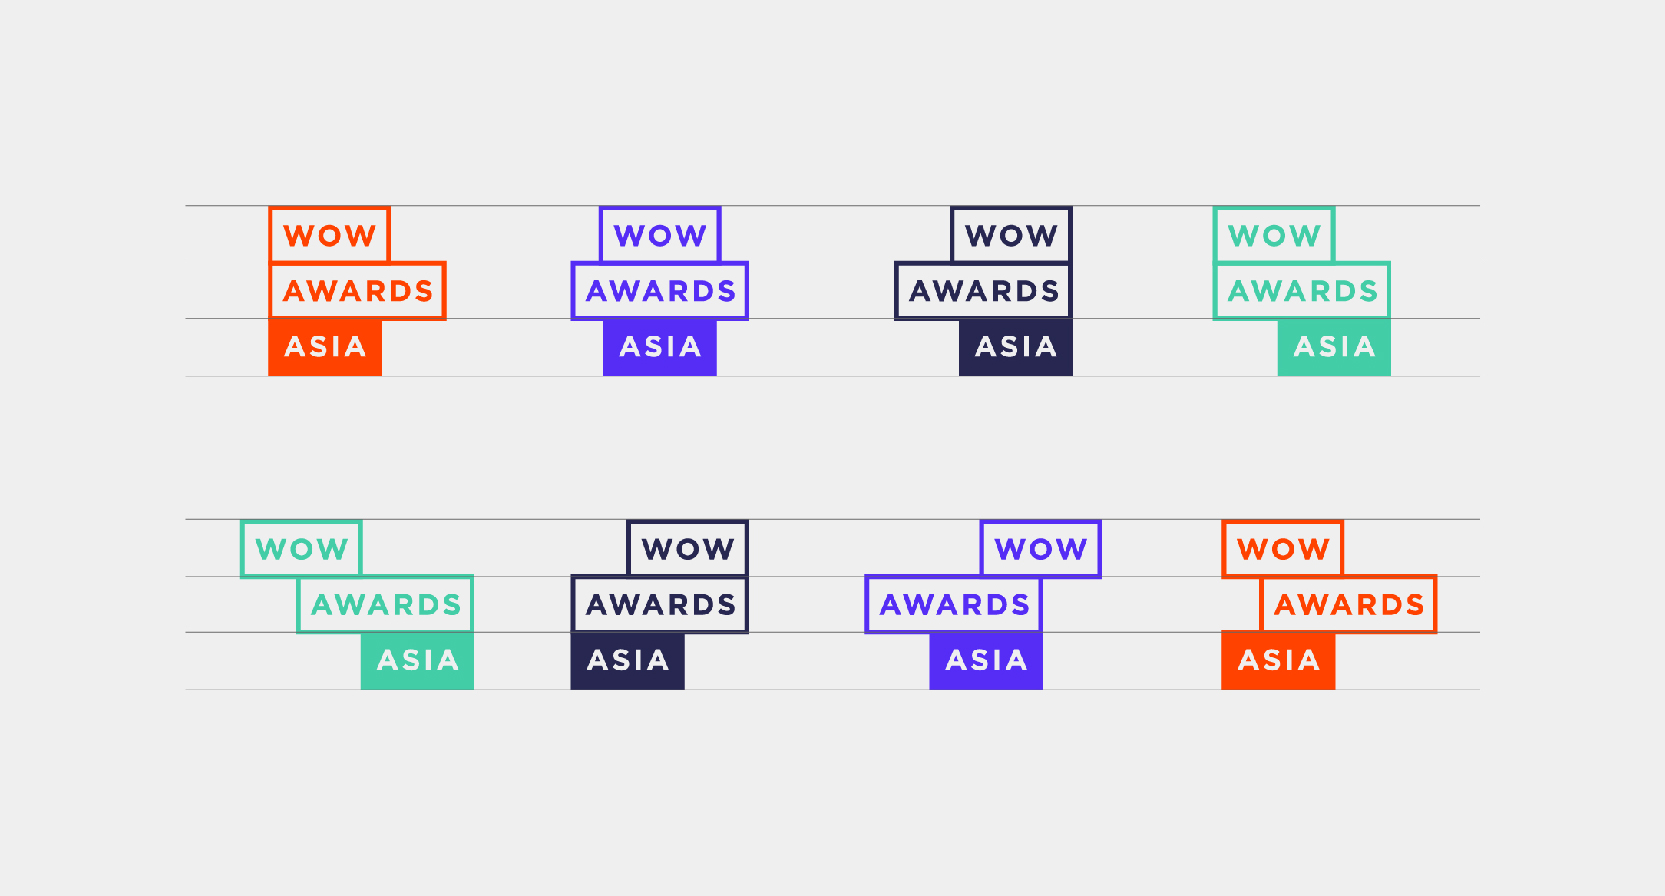 wow awards Asia logos